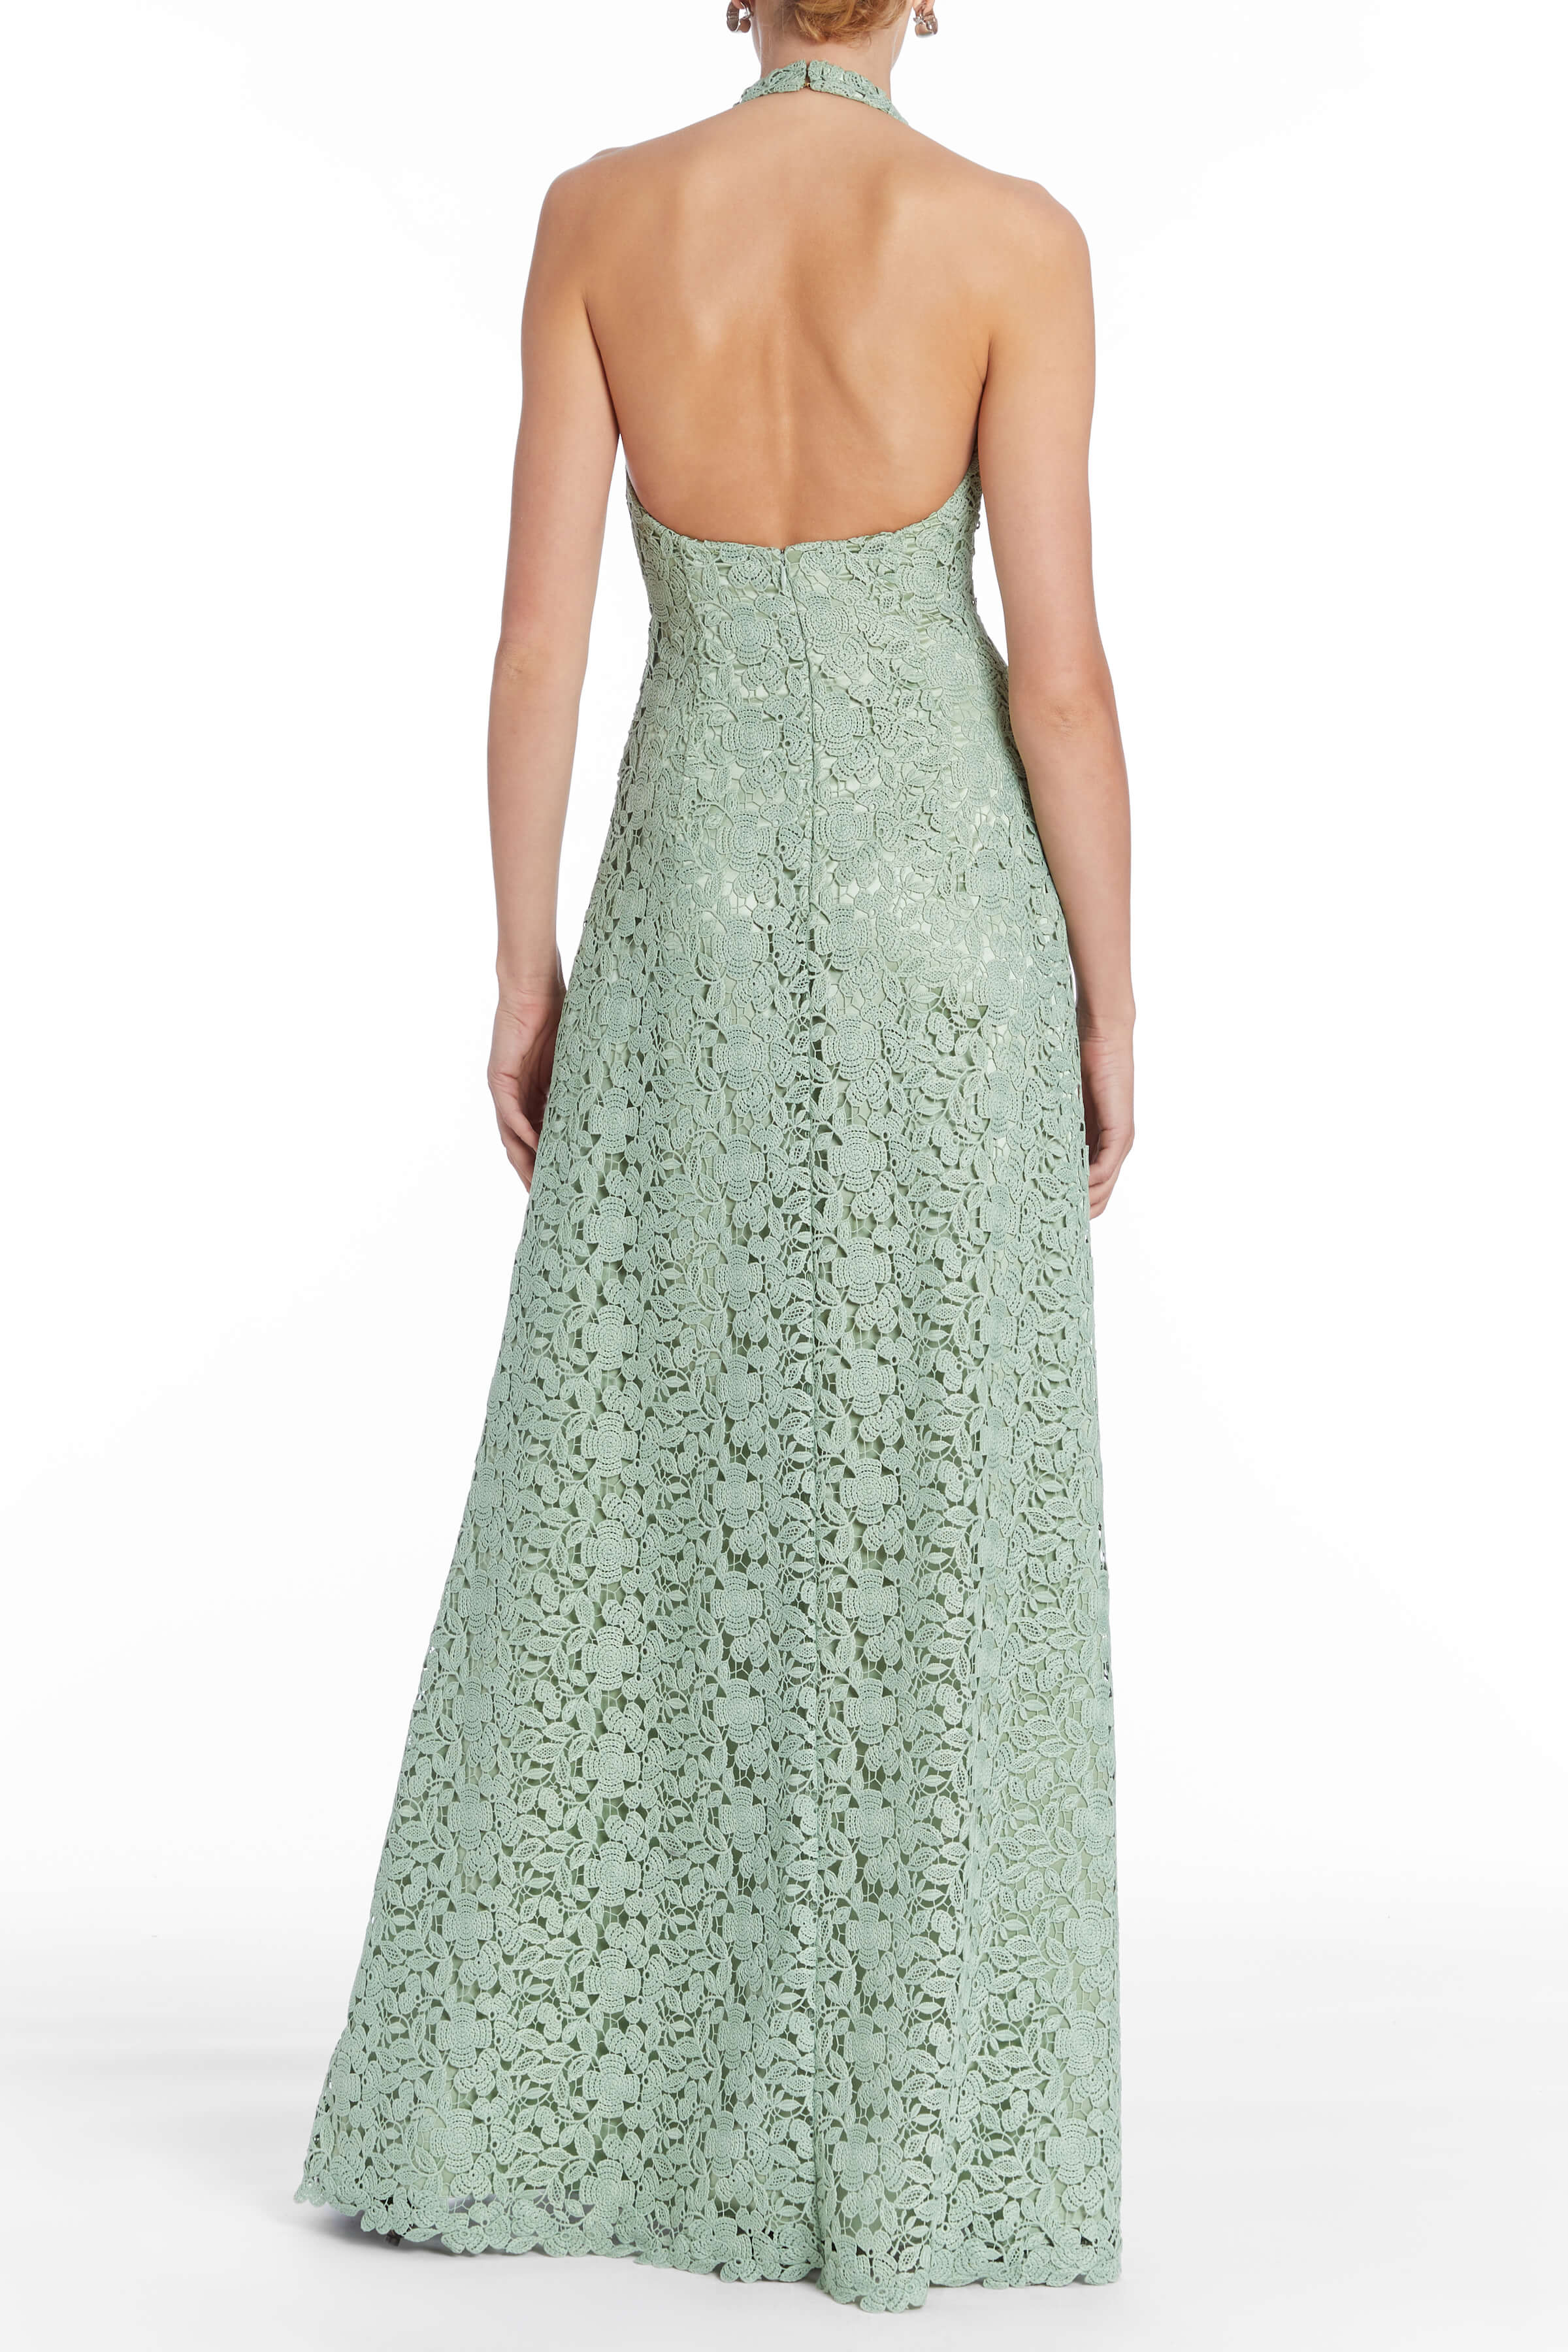 SALE: Sahara Green Crochet Lace Gown